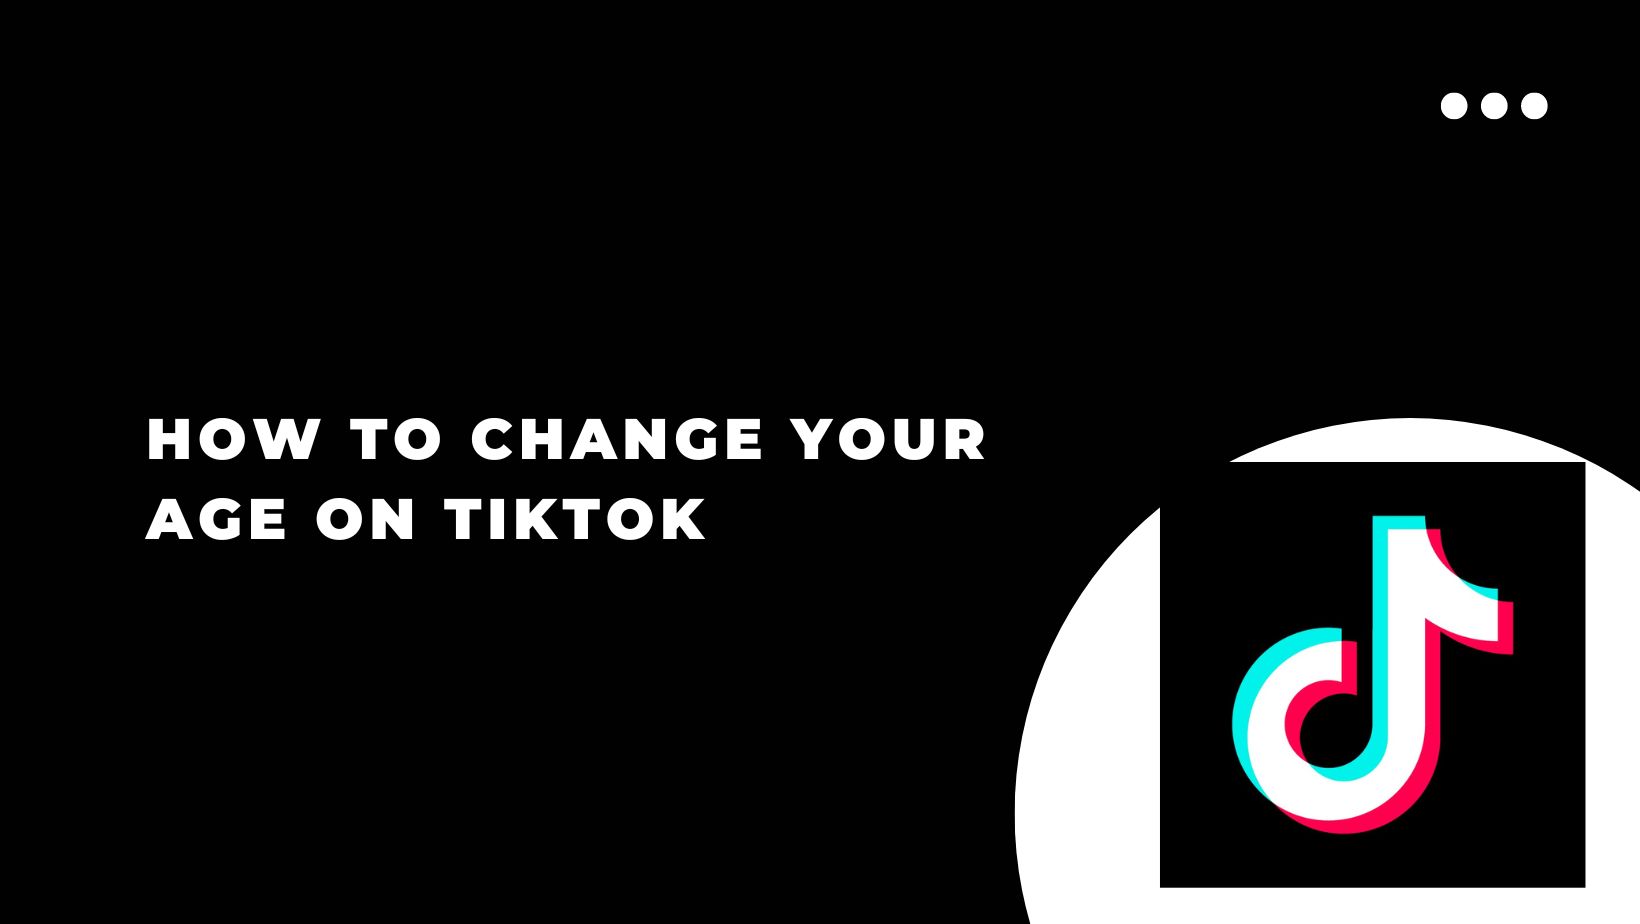 Change age on Tiktok